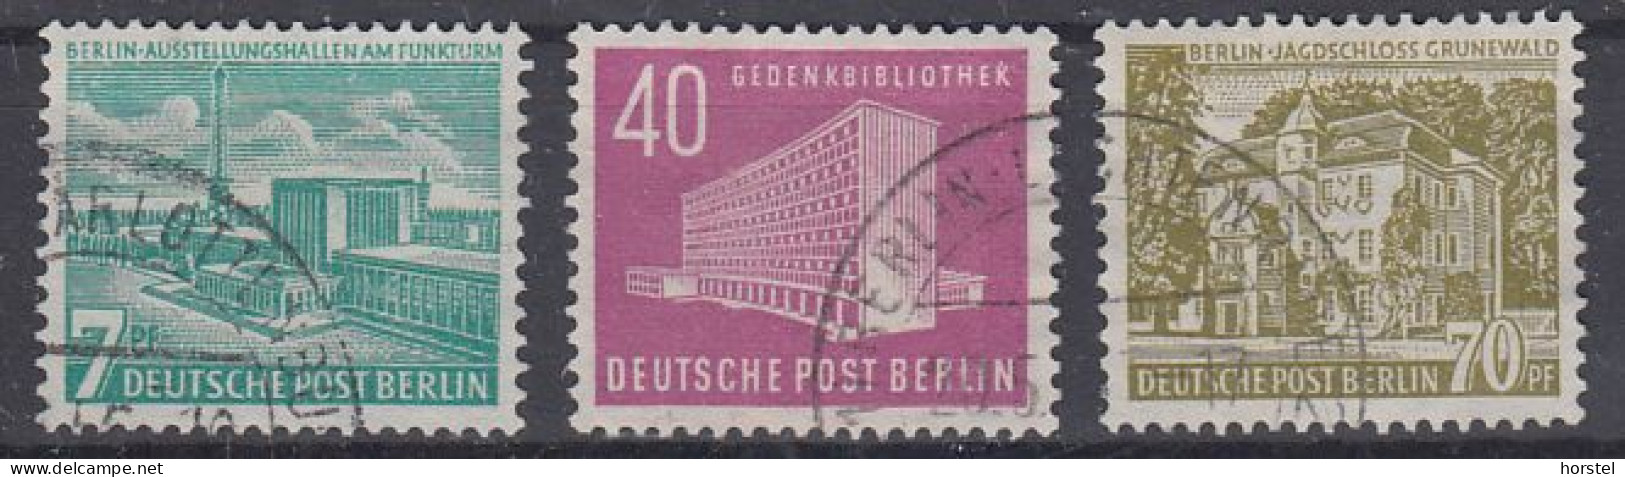 Deutschland Mi 121-23 Berliner Bauten - Amerika Gedenkbibliothek - Jagdschloß Grunewald - Funkturm - Used Stamps